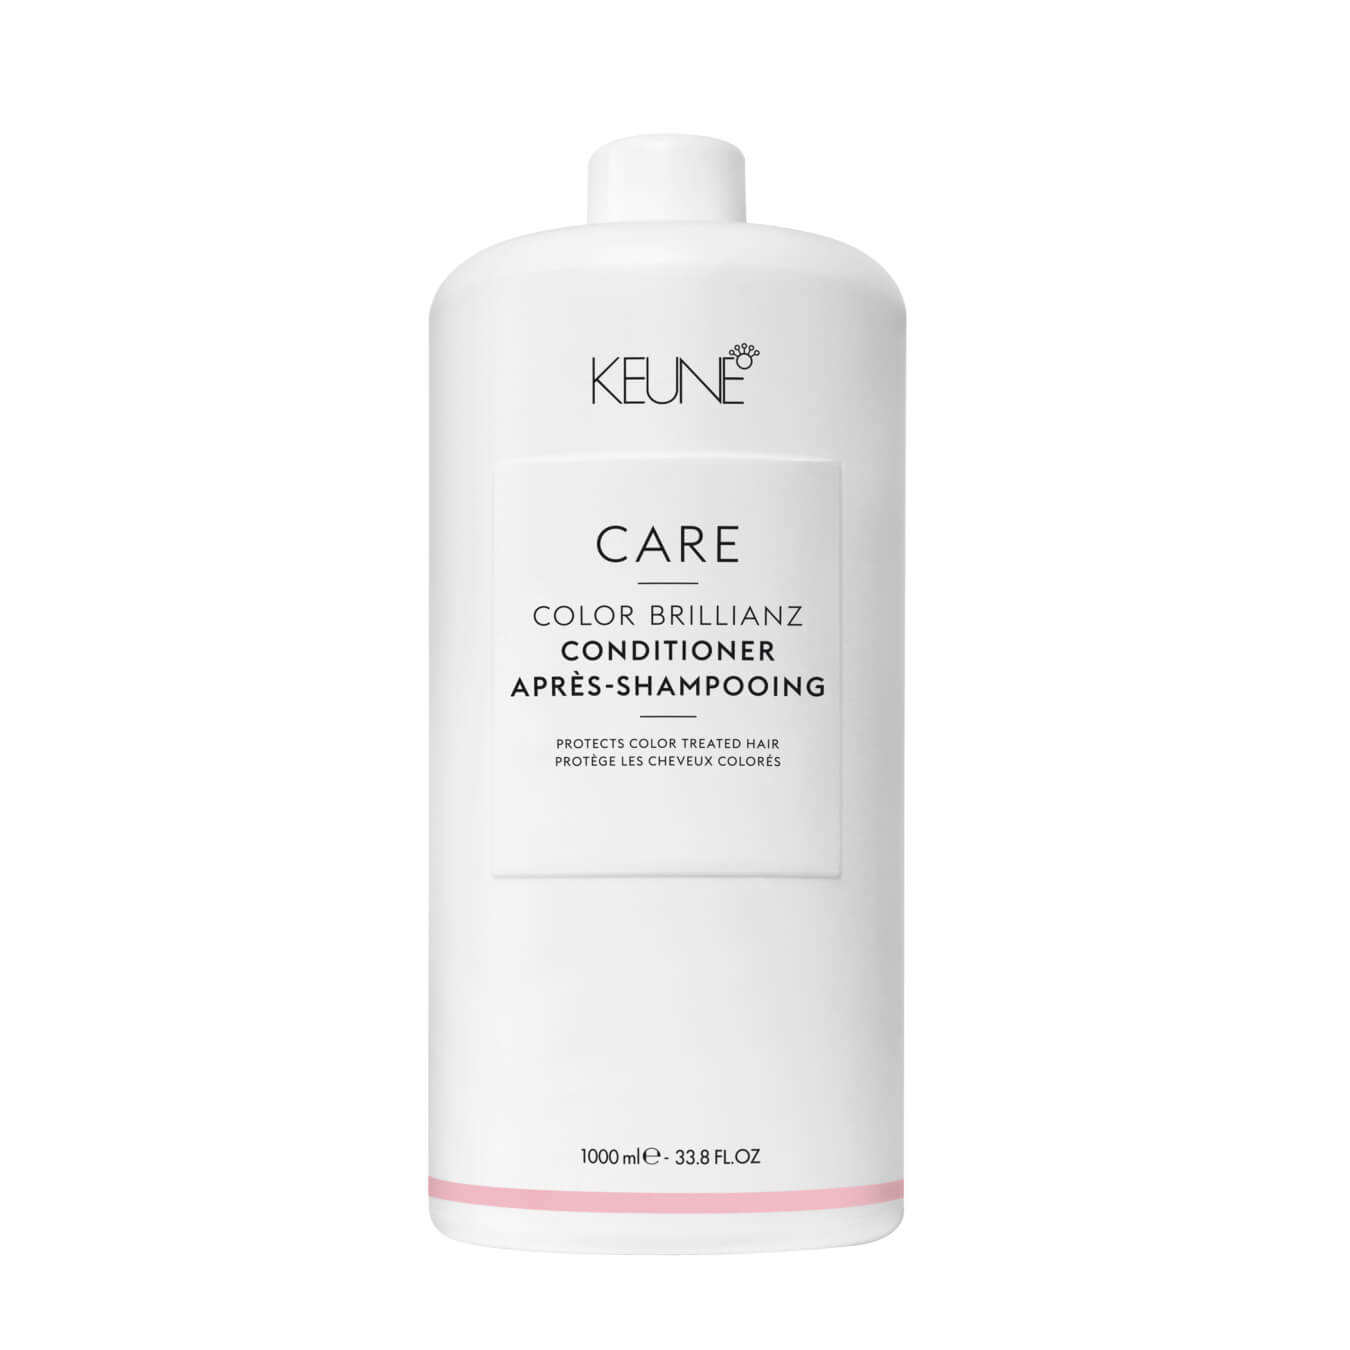 Keune Care Color Brillianz Conditioner CFH Care For Hair Webshop  #1000ml